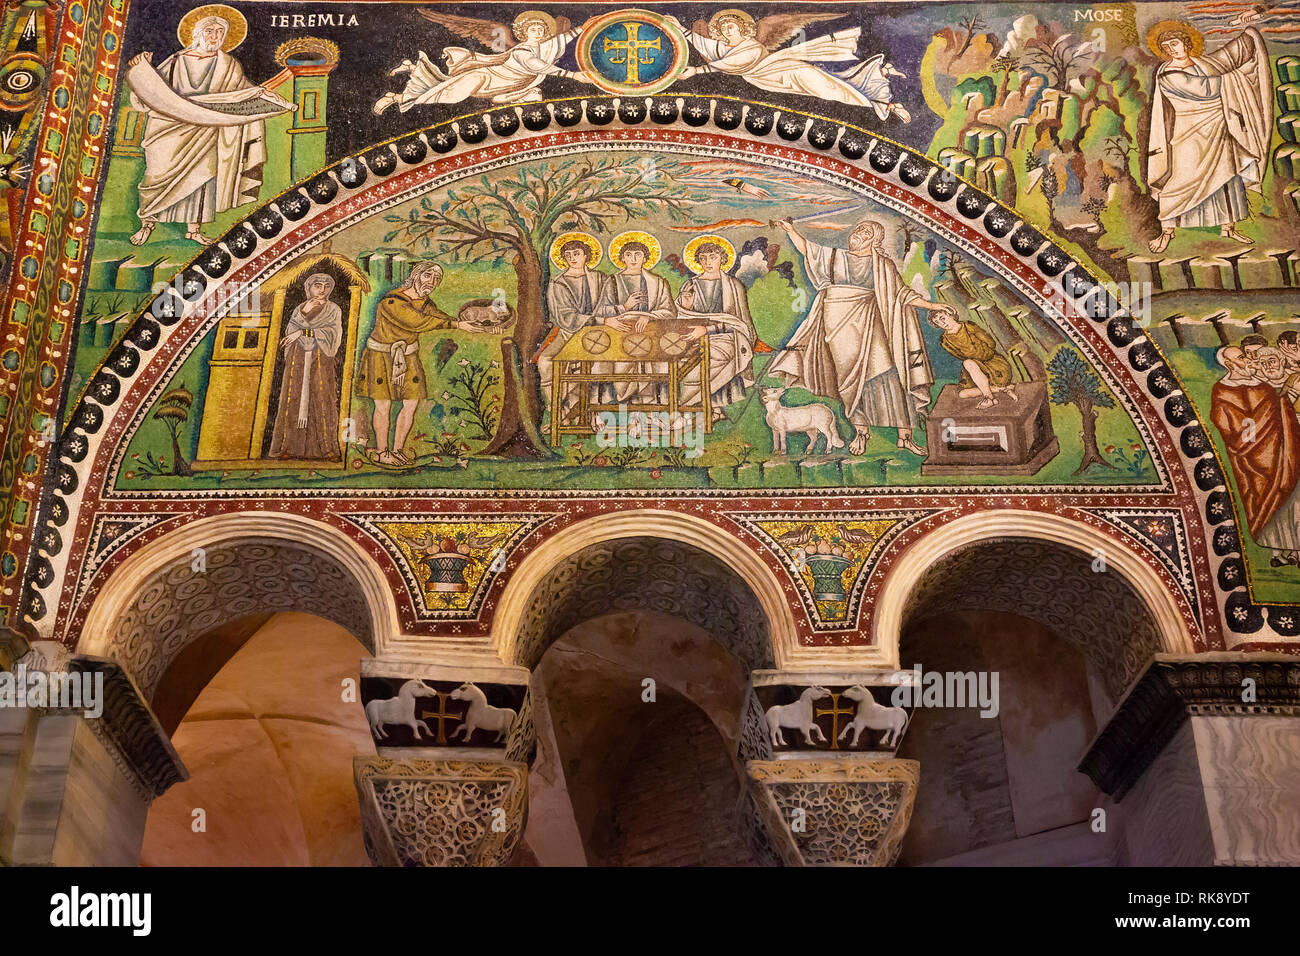 The byzantine mosaic Sacrifice of Isaac. Mosaic from the Basilica San Vitale in Ravenna. Stock Photo